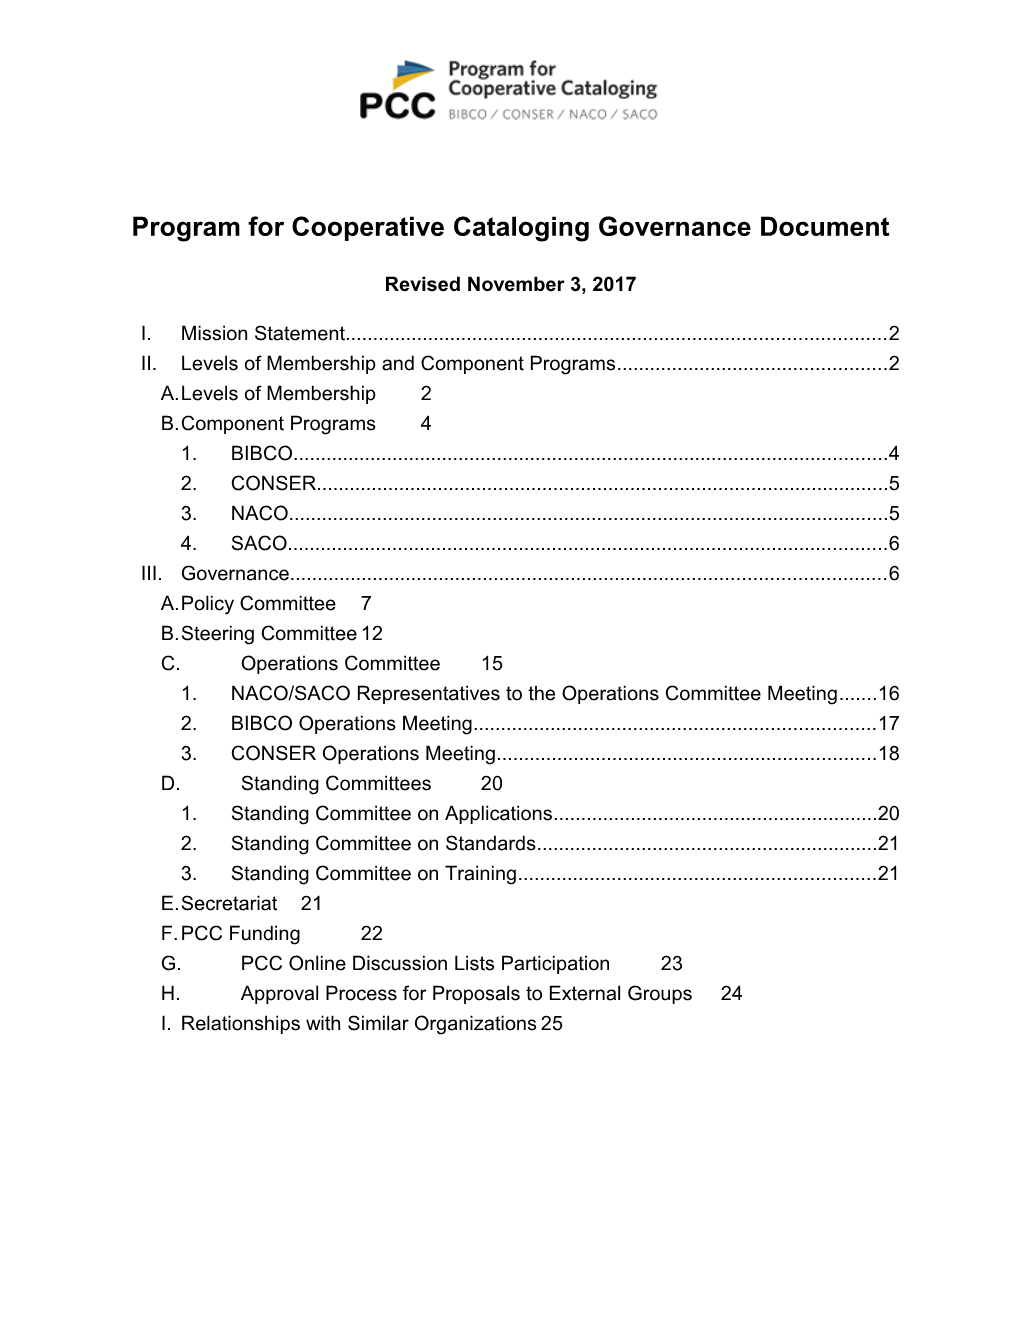 Program for Cooperative Cataloging Governance Document